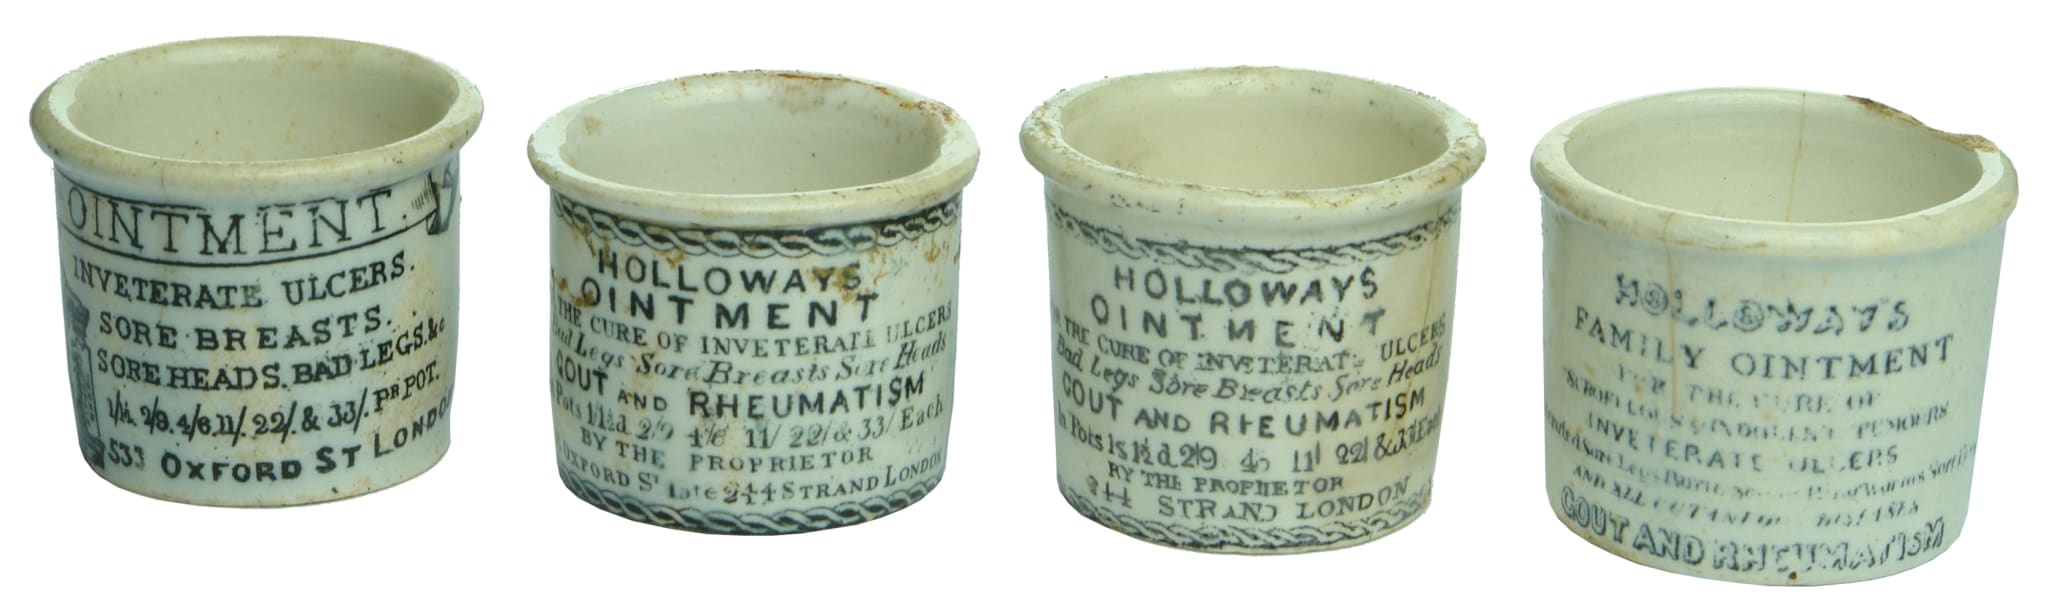 Holloways Ointment Pots